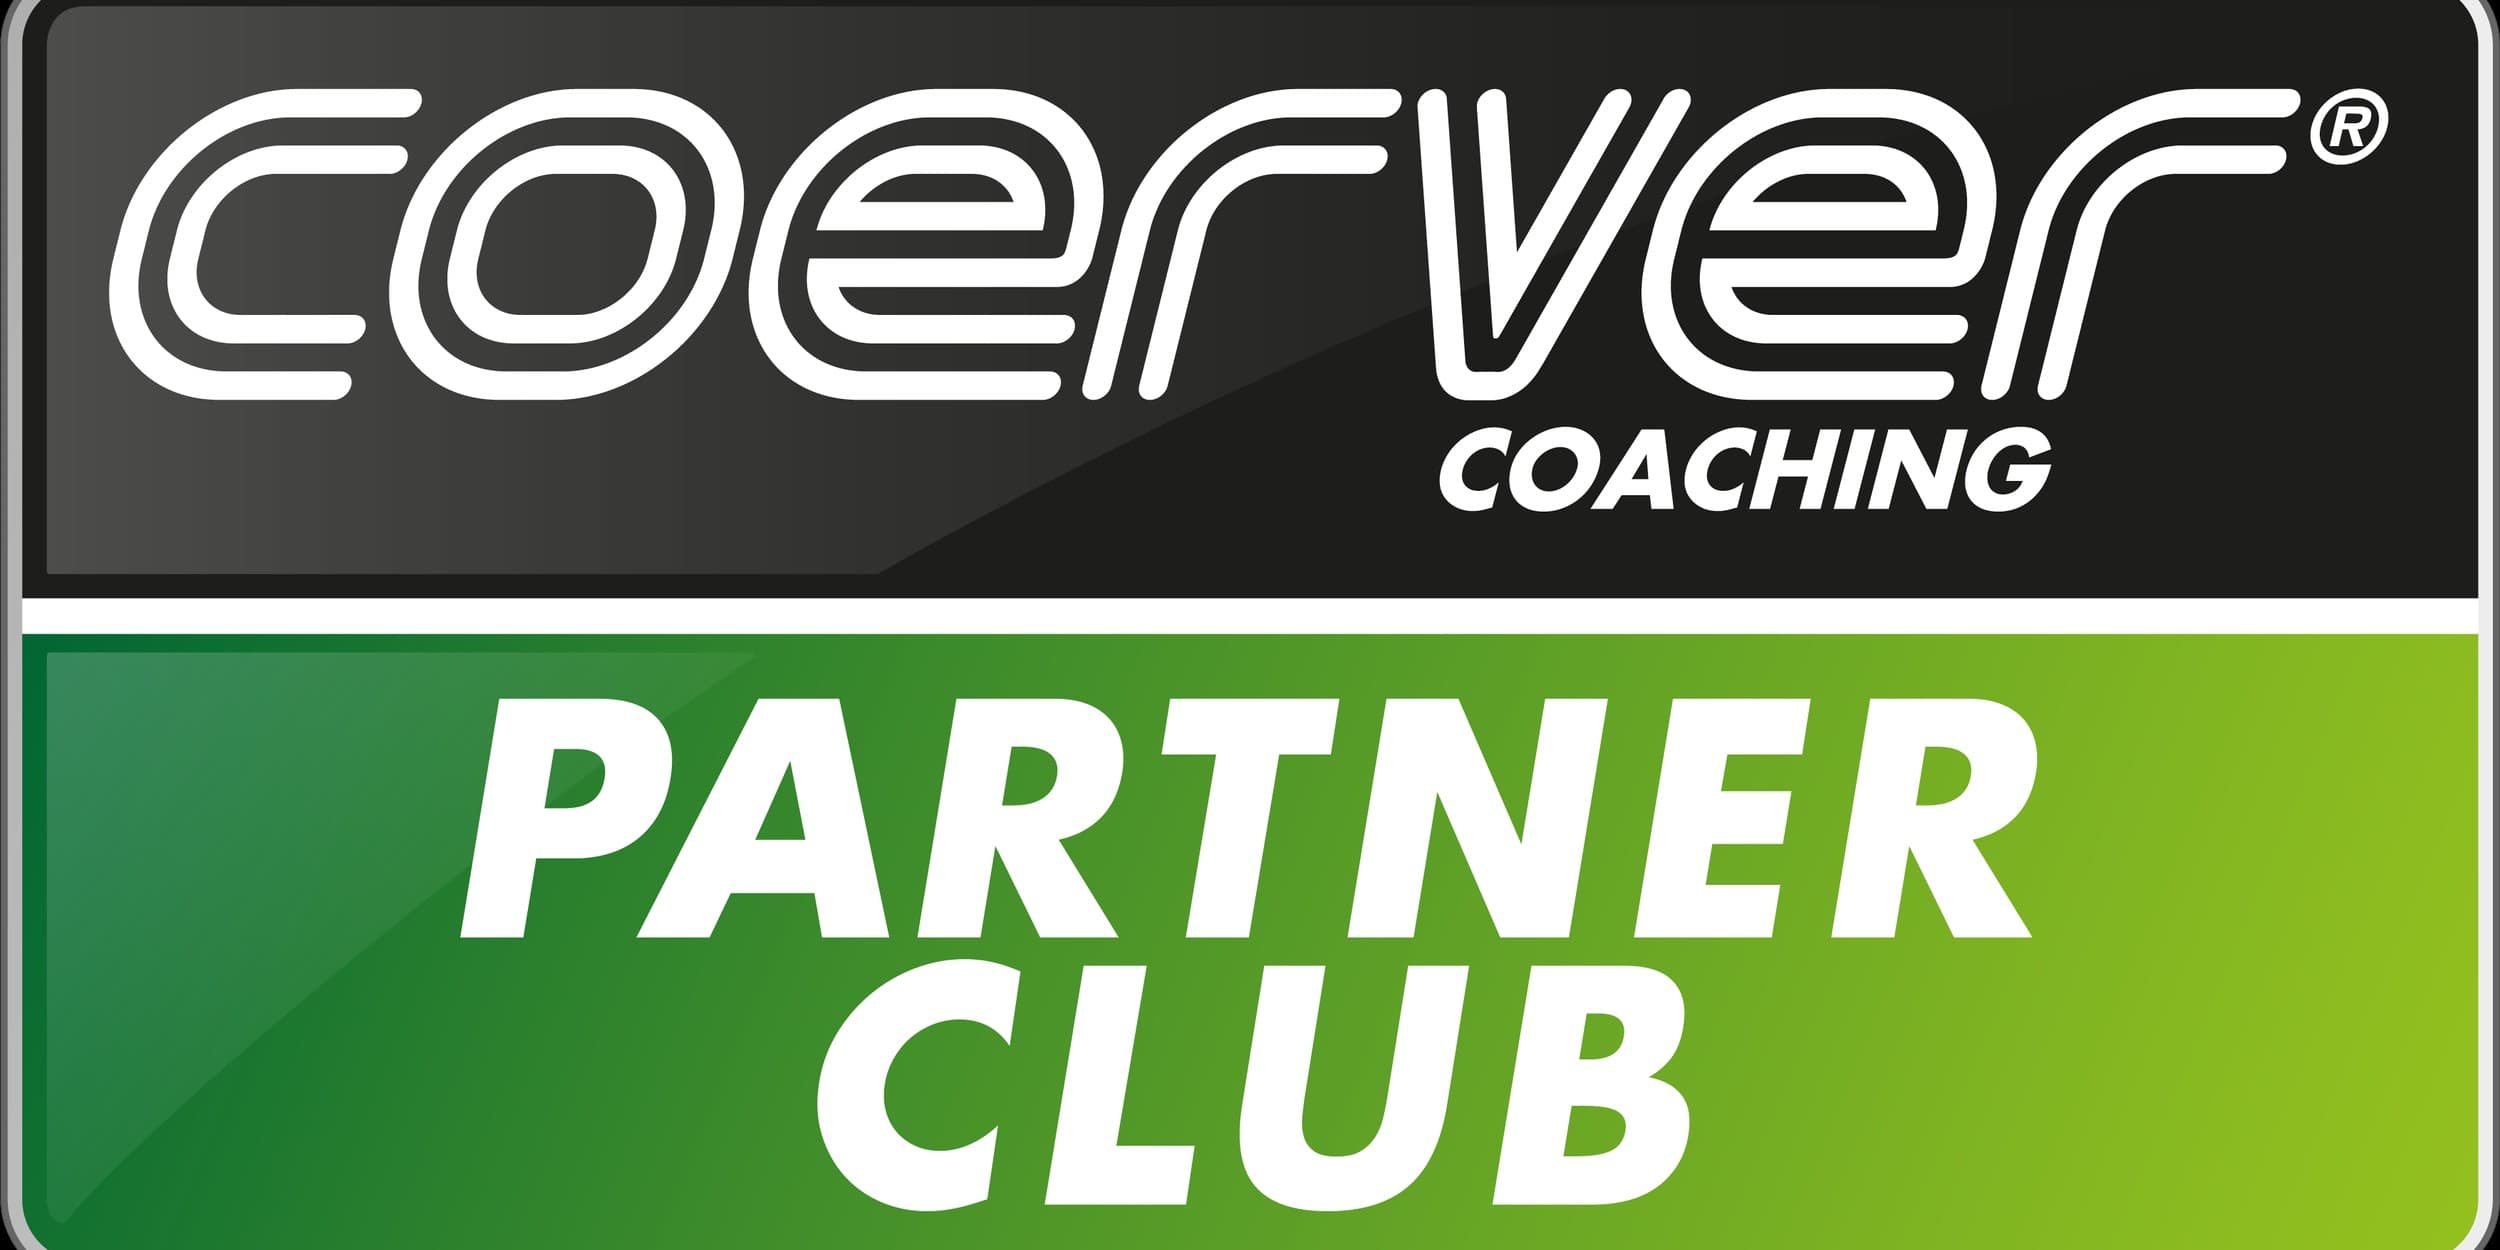 Coerver Club Partnership